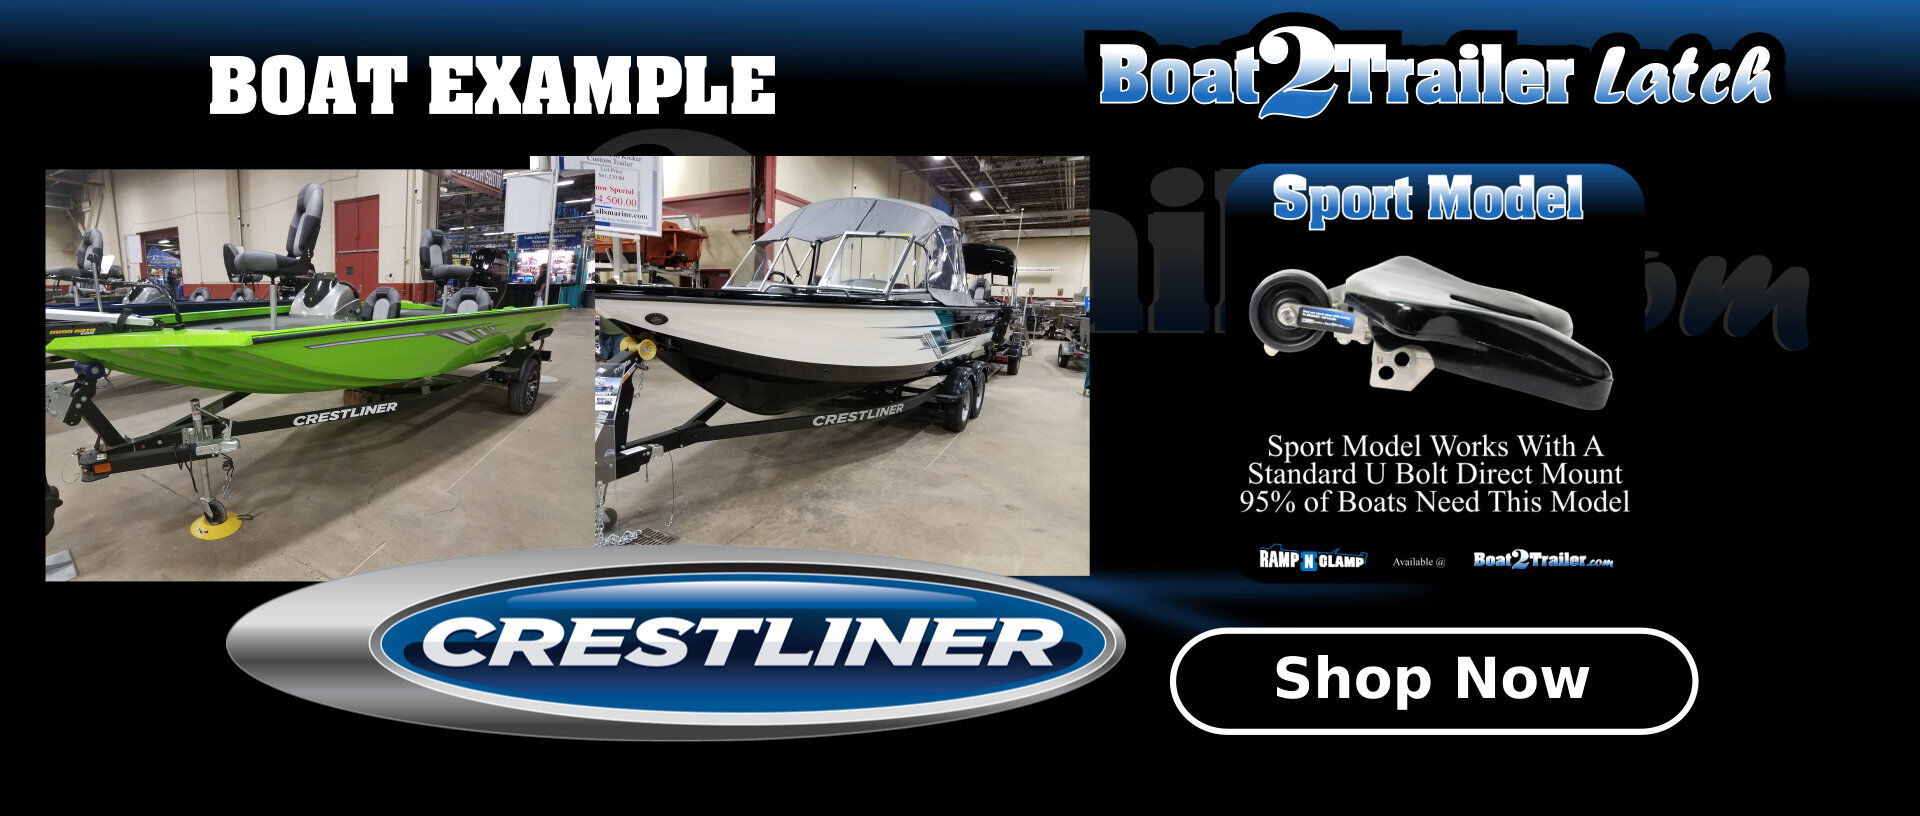 Crestliner Automatic Boat Latch